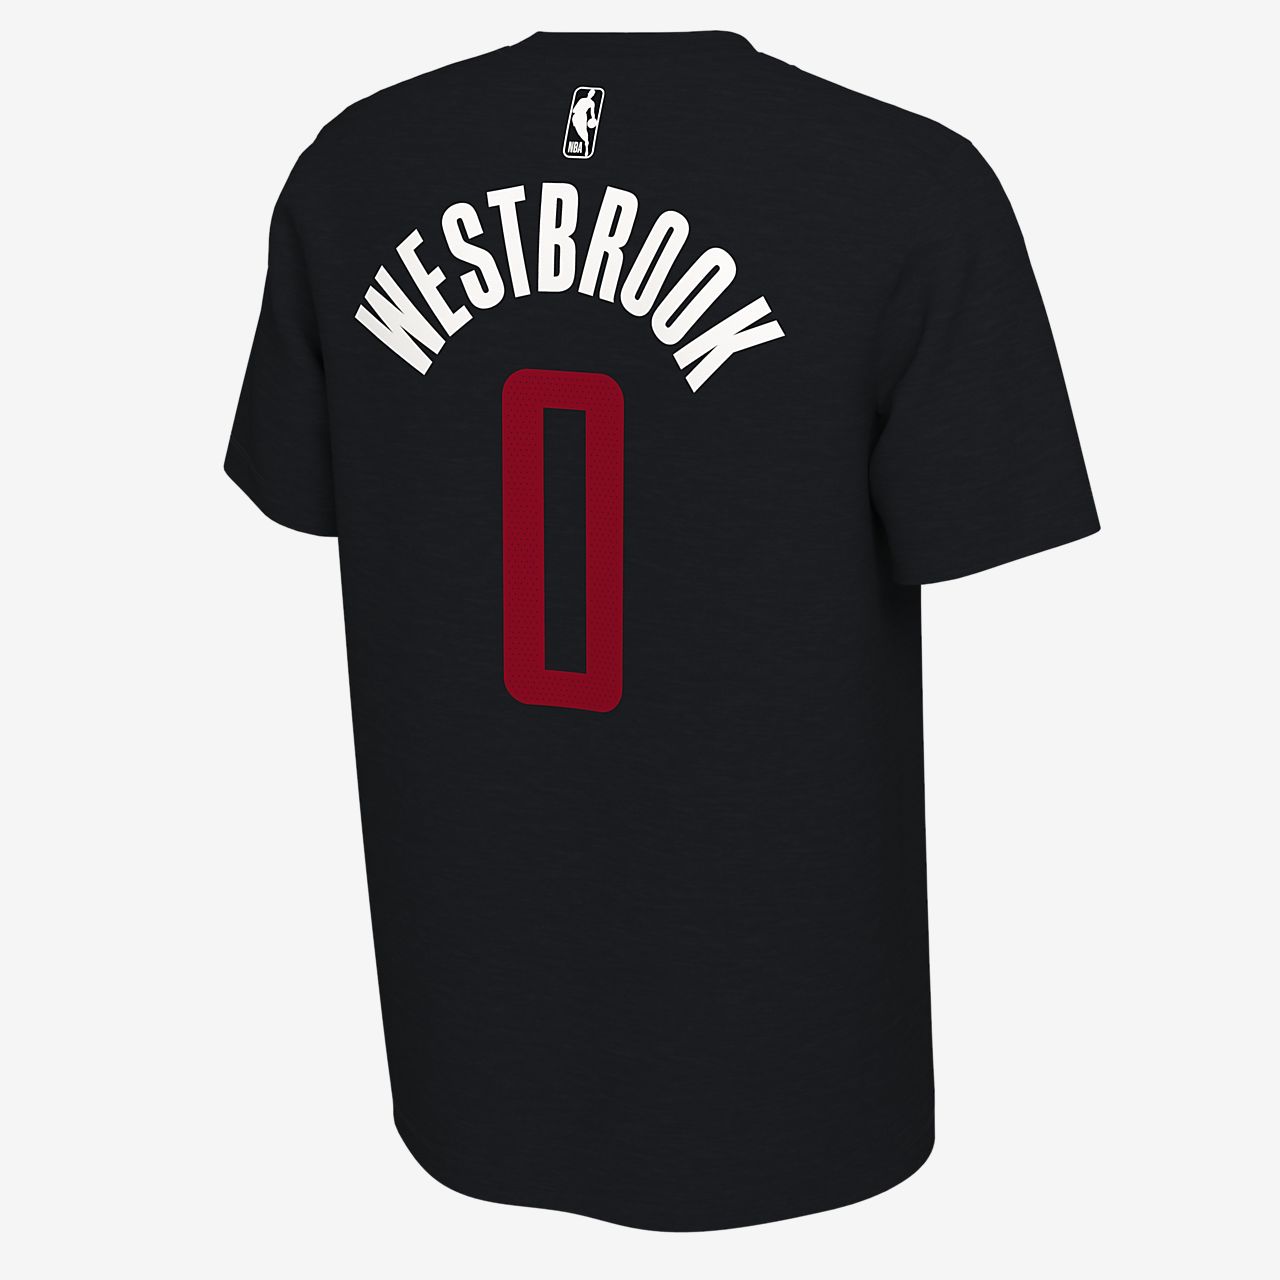 westbrook t shirt